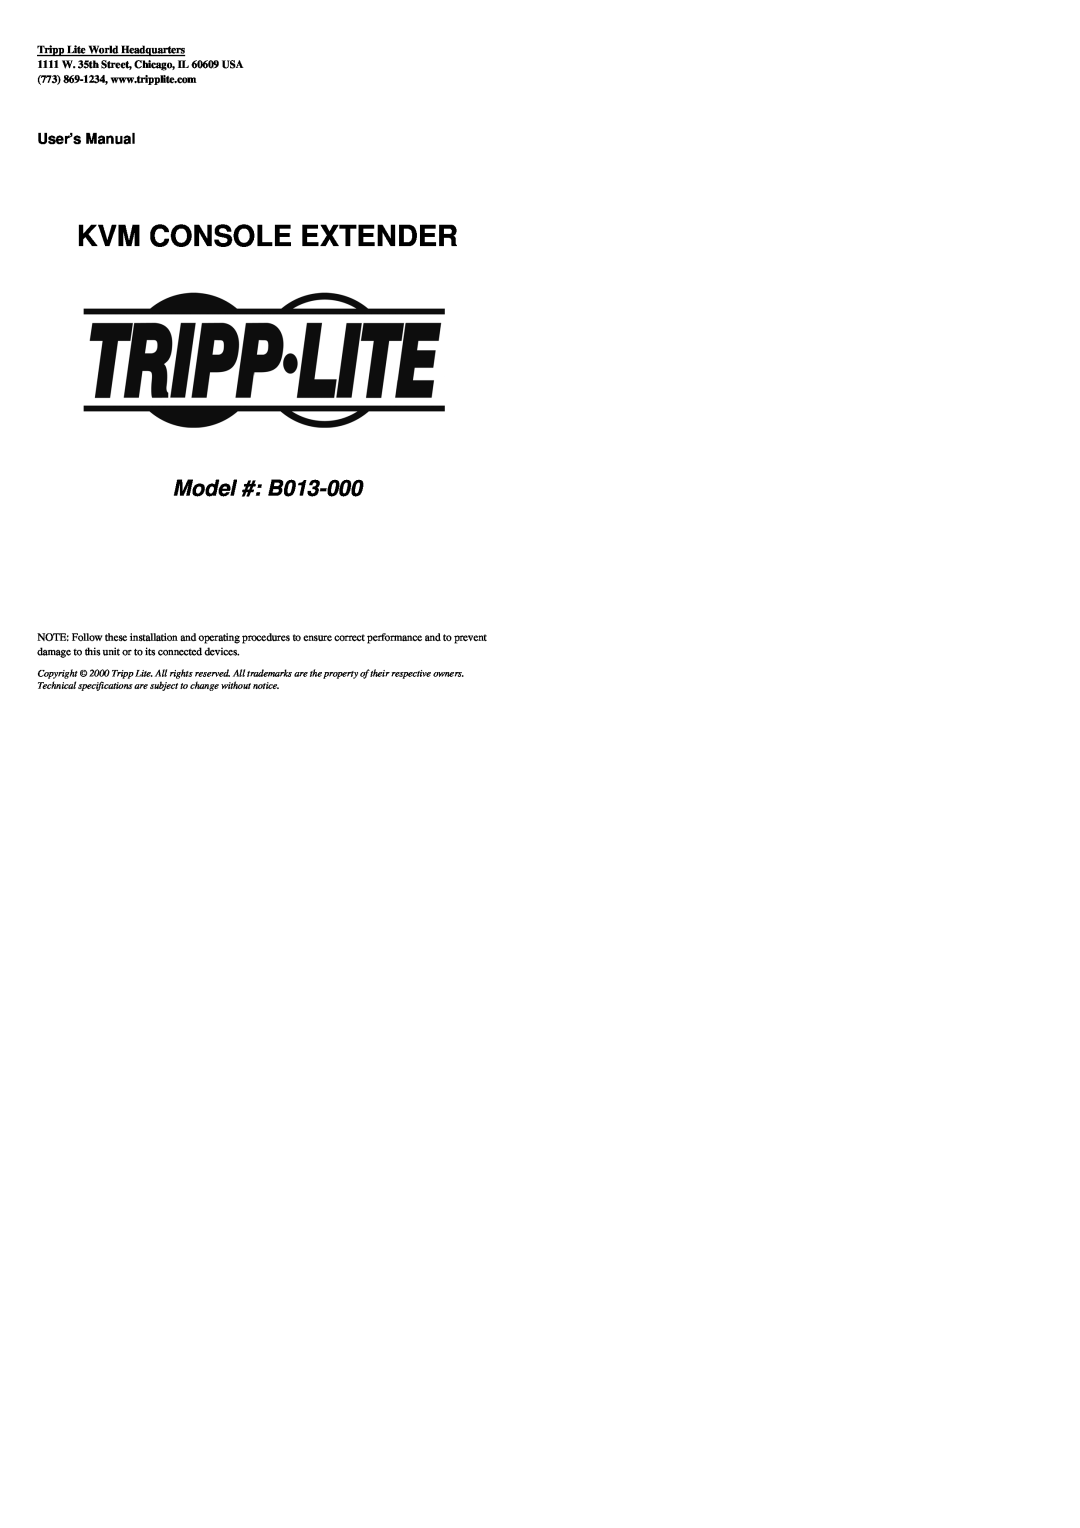 Tripp Lite user manual Kvm Console Extender, Model # B013-000, User’s Manual, Tripp Lite World Headquarters 